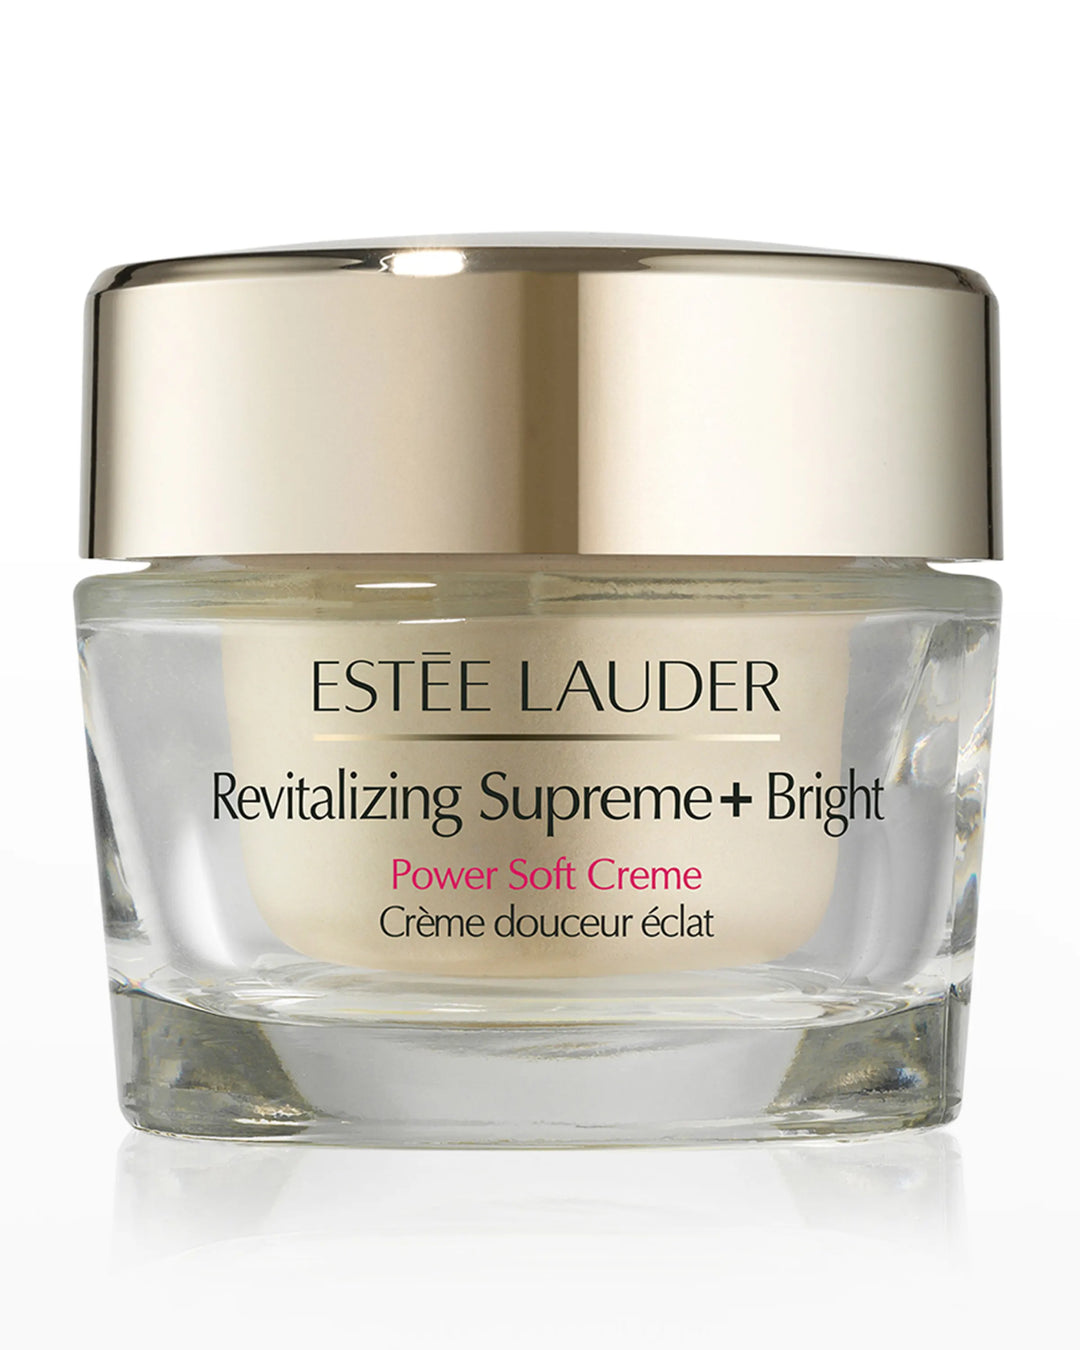 Estee Lauder Revitalizing Supreme+ Bright Moisturizer Power Soft Creme 1.7oz